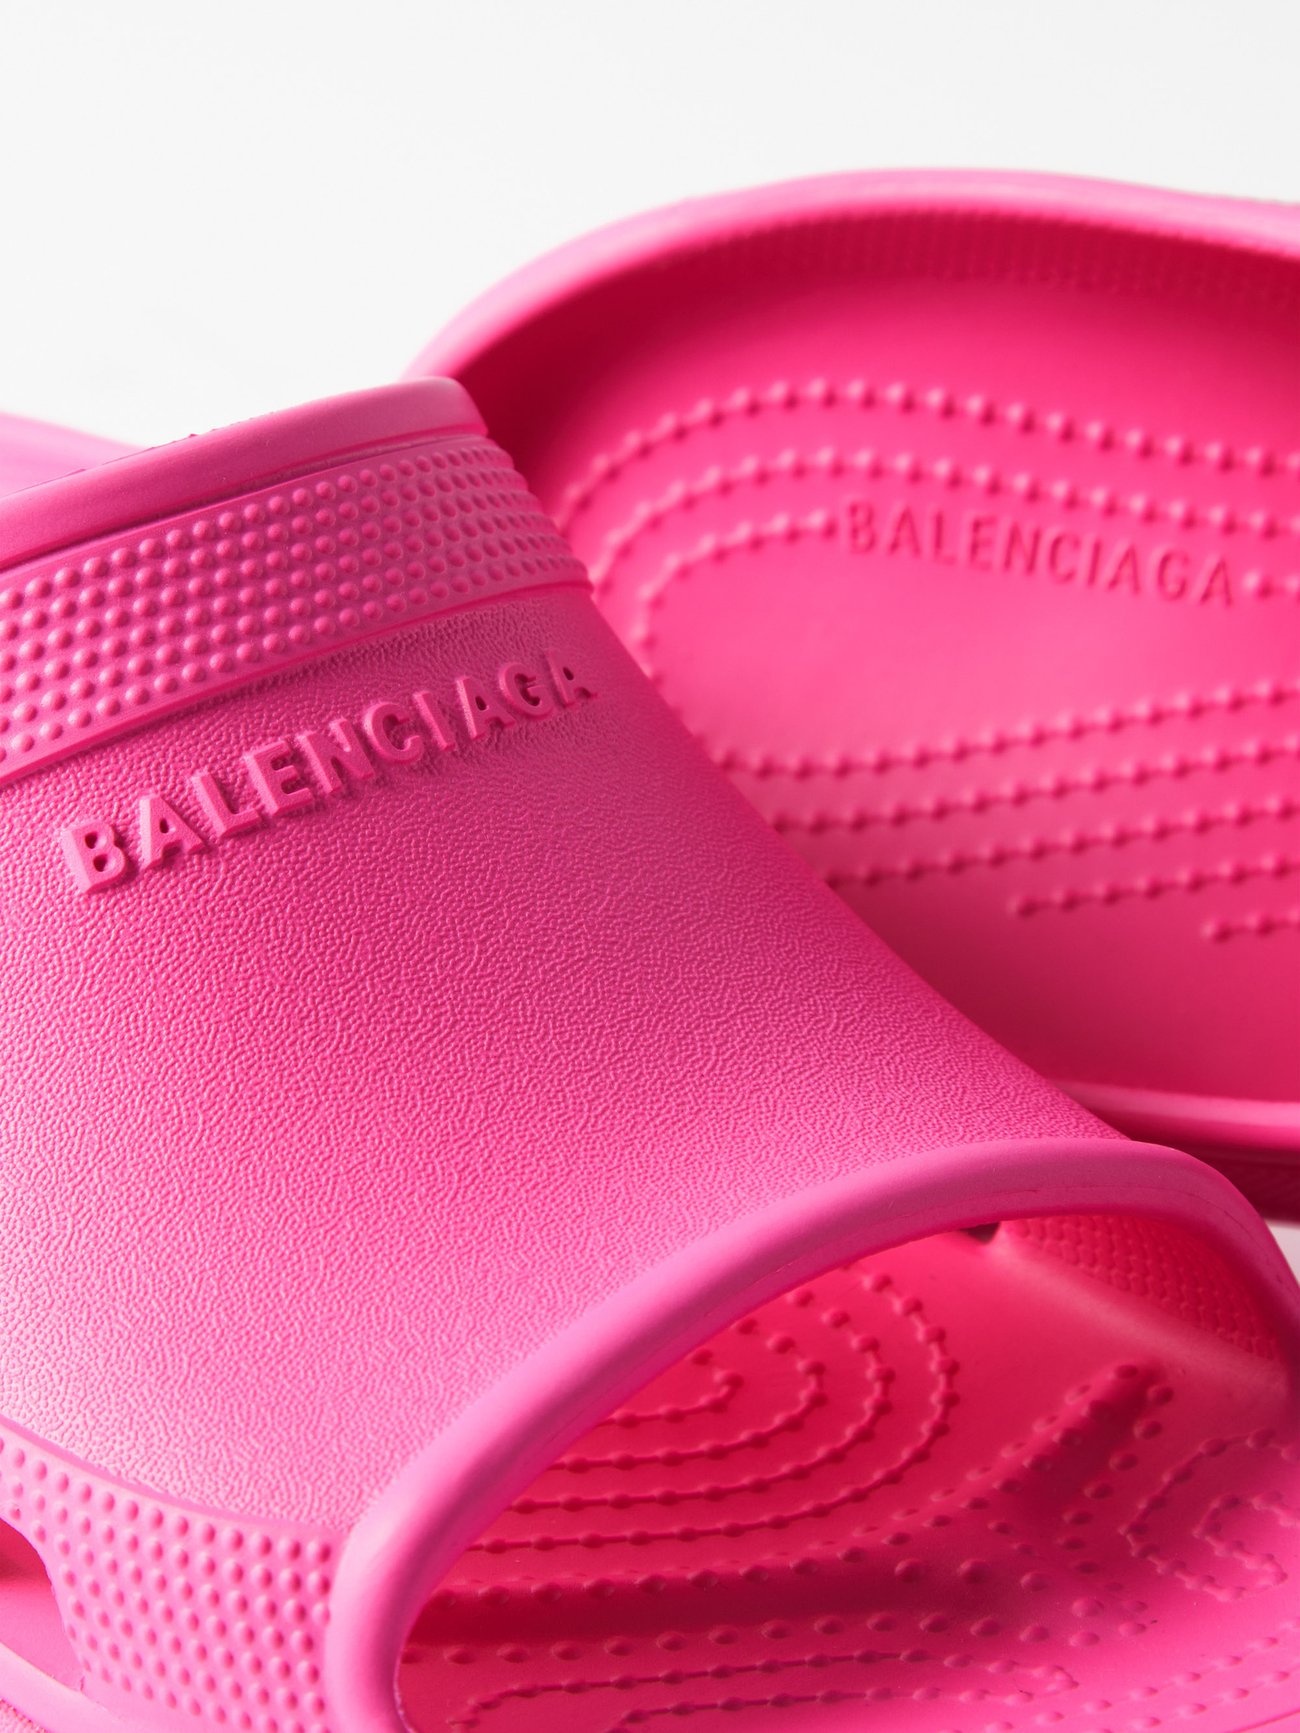 Balenciaga x Crocs鈩 Platform Slide Sandals - Pink